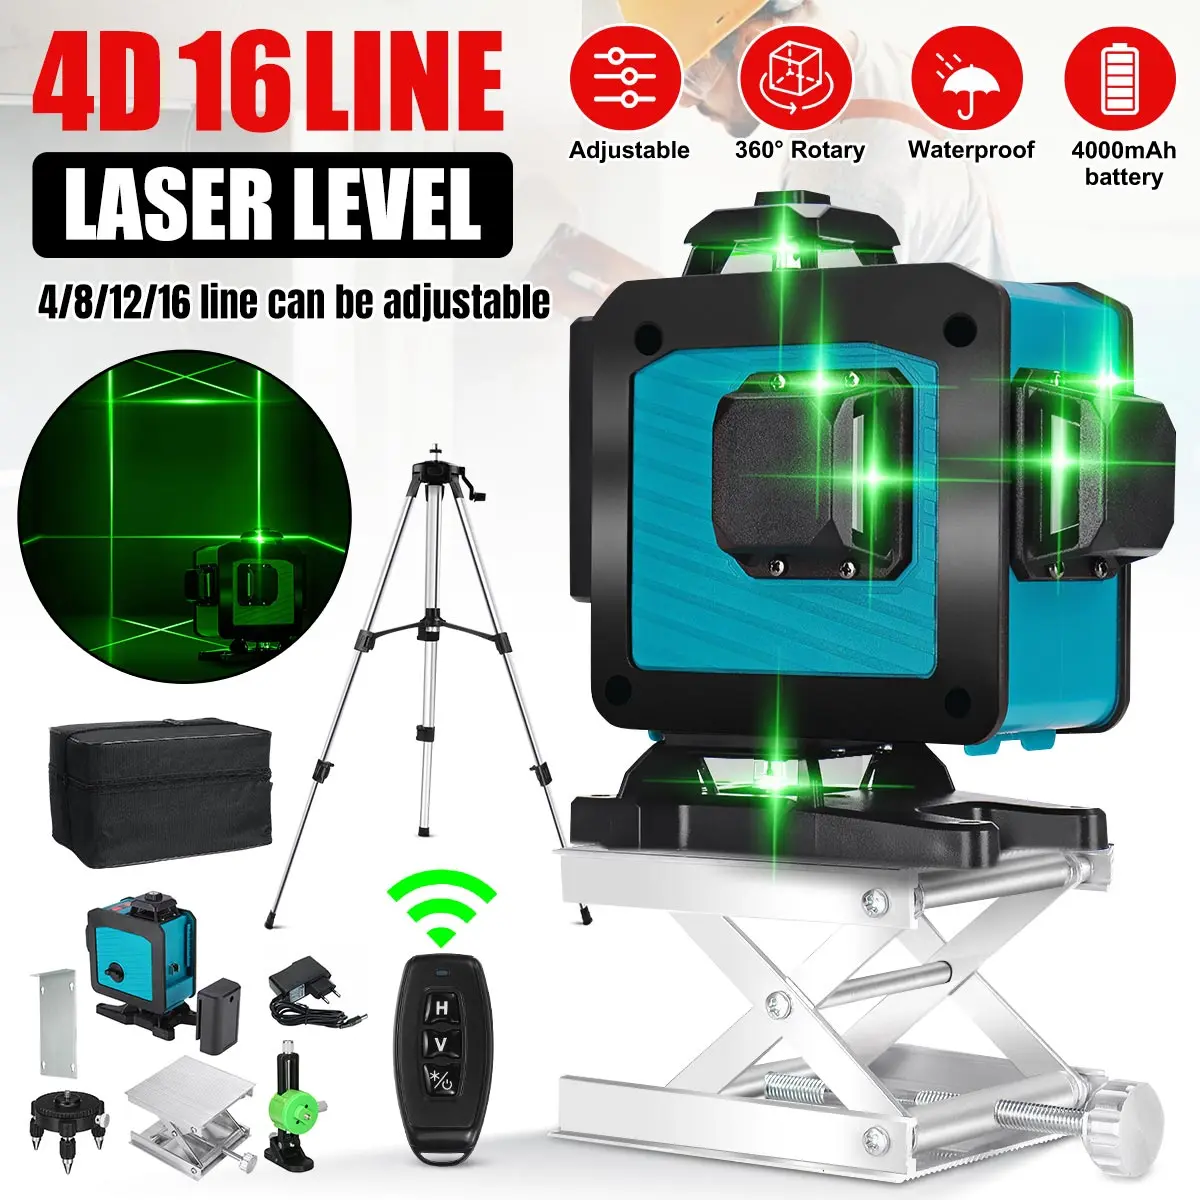 

Hot Sale 4D 16 Line Laser Levels 360 Horizontal Vertical Cross Light Laser Level Self-Leveling Measure Super Powerful Laser Beam